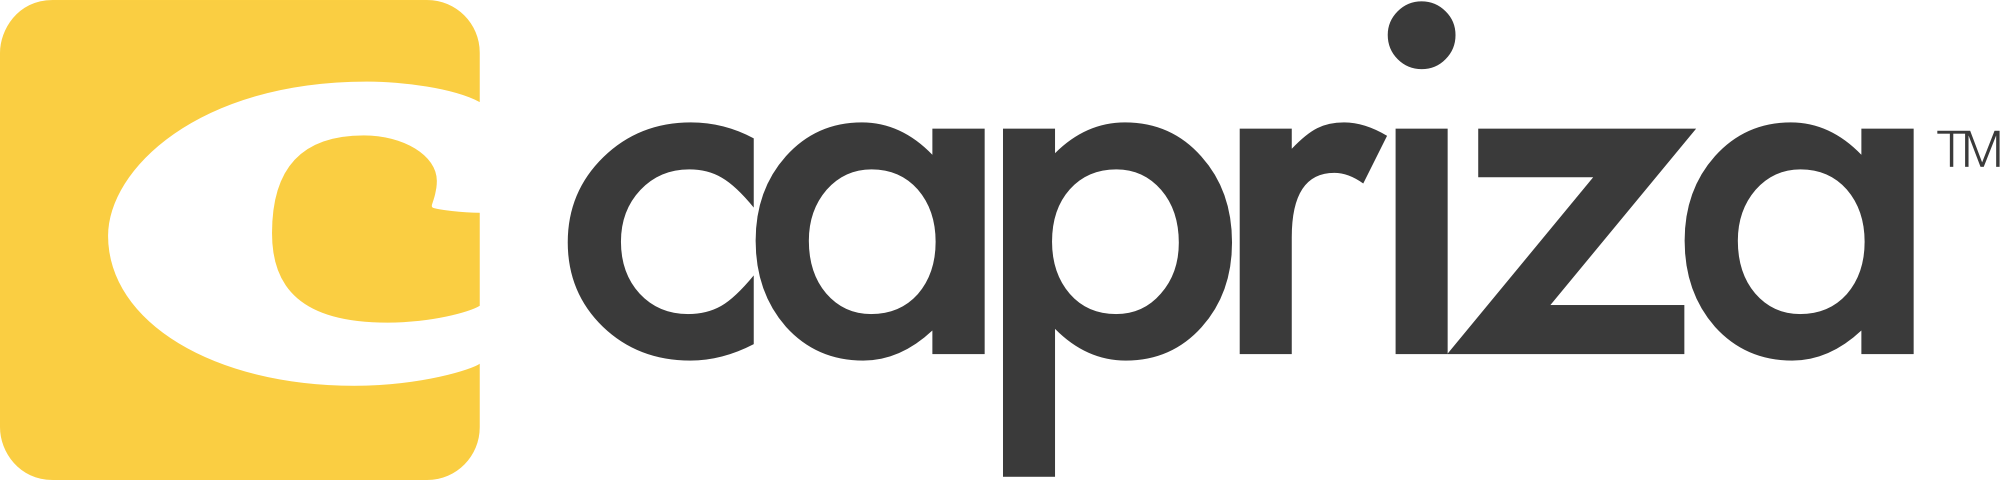 MailChimp logo png